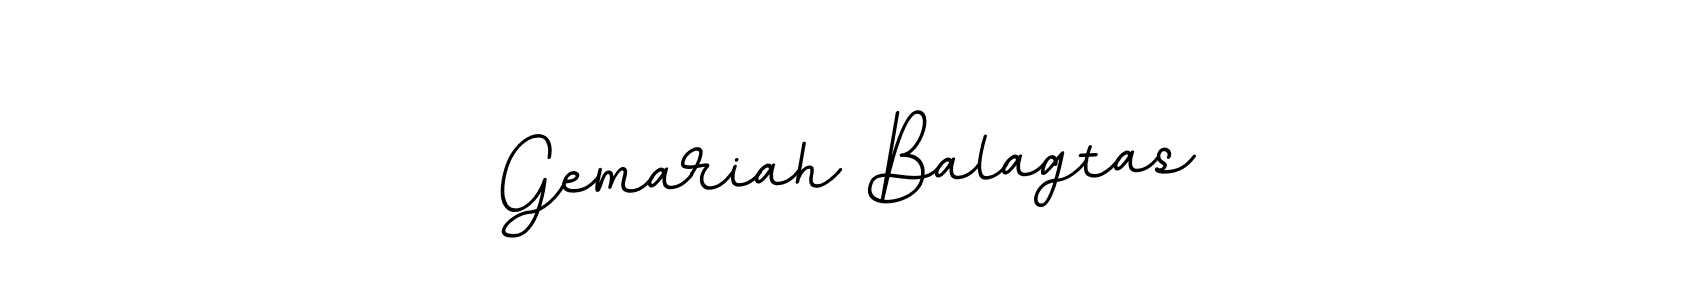 How to Draw Gemariah Balagtas signature style? BallpointsItalic-DORy9 is a latest design signature styles for name Gemariah Balagtas. Gemariah Balagtas signature style 11 images and pictures png